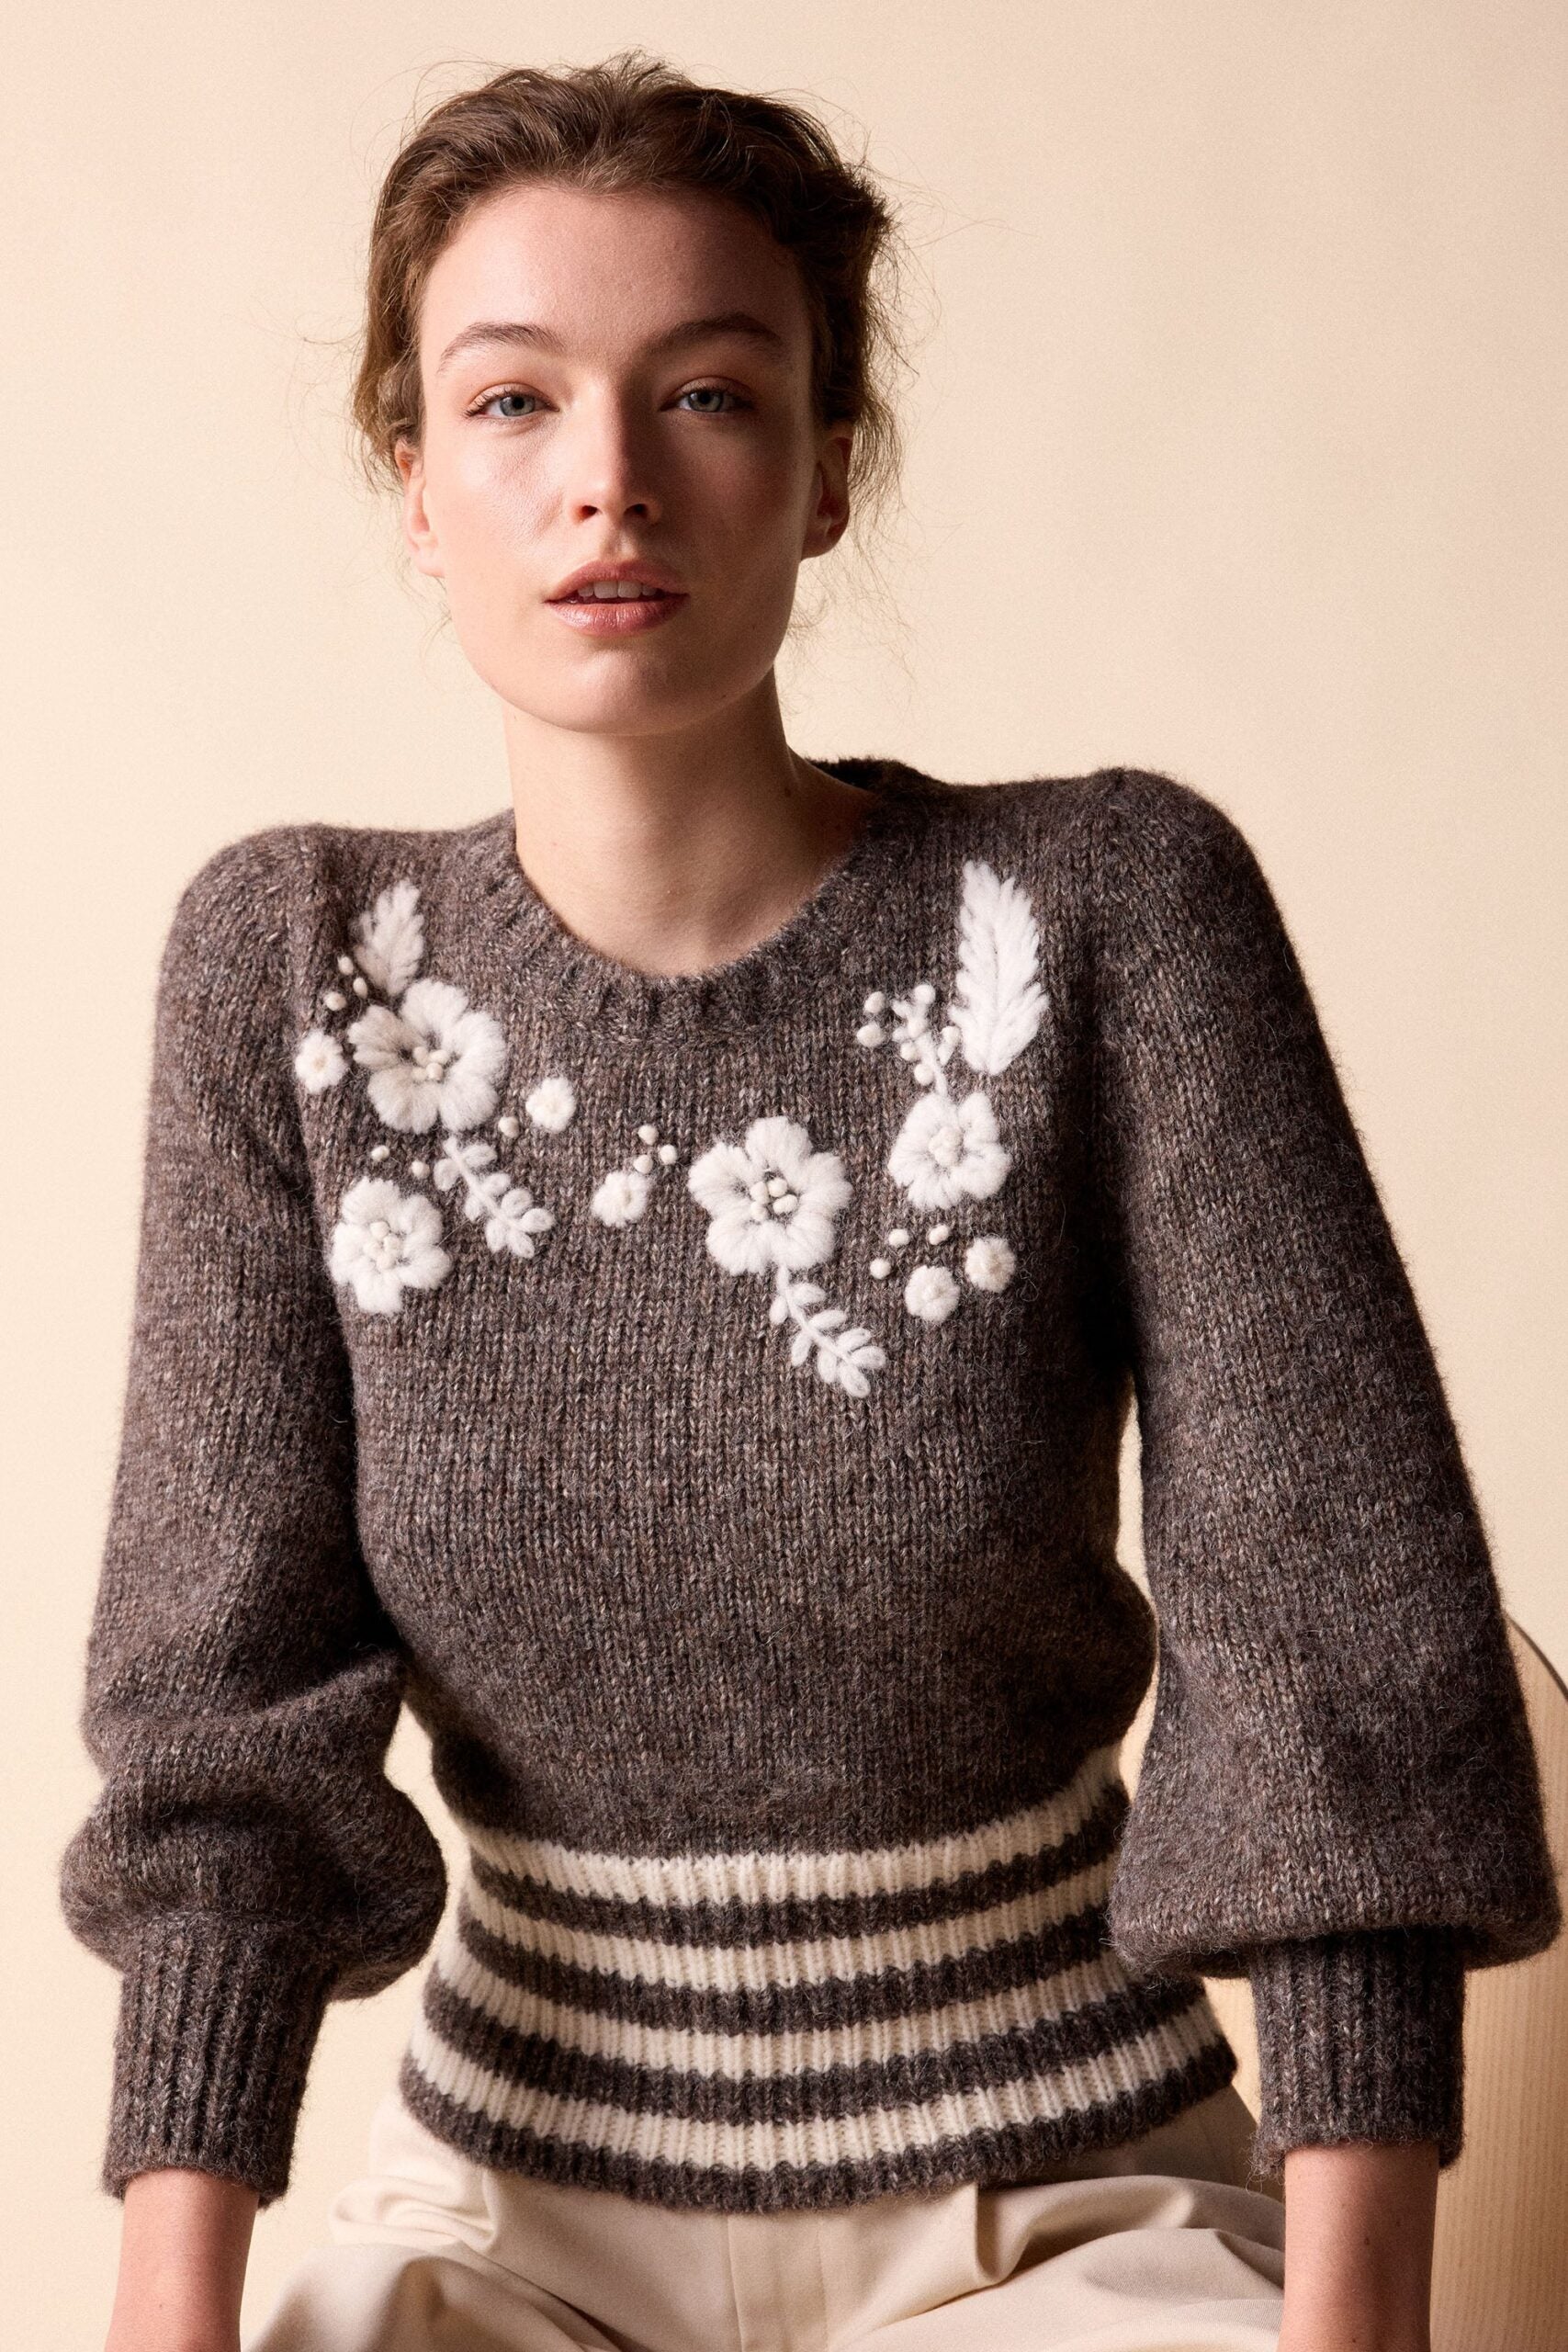 FINAL SALE ST. ROCHE Juniper Sweater Charcoal w/ Ivory